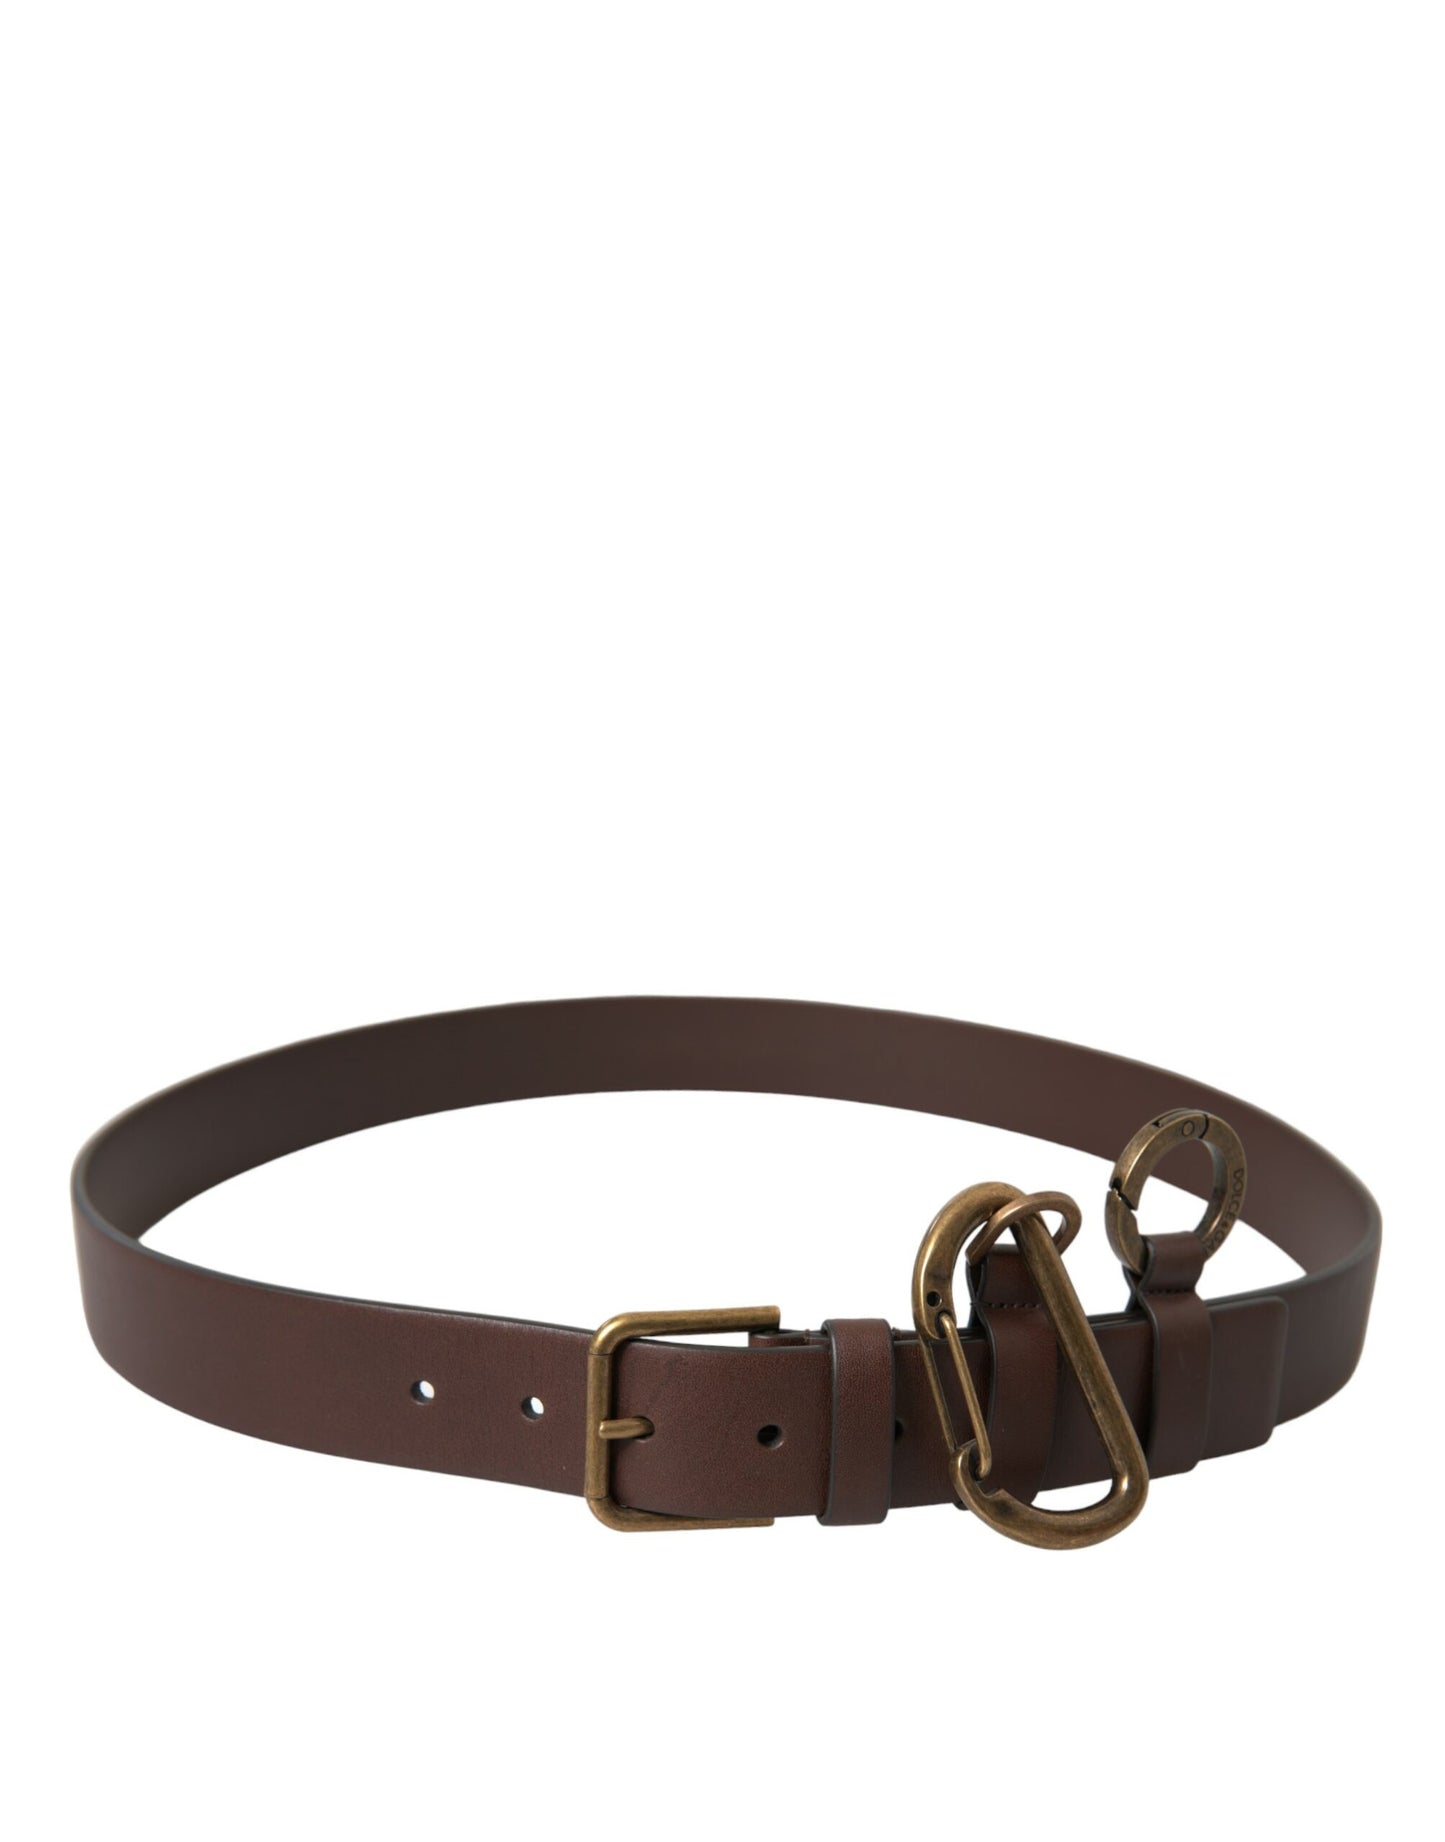 Elegant Calf Leather Belt with Metal Buckle Closure